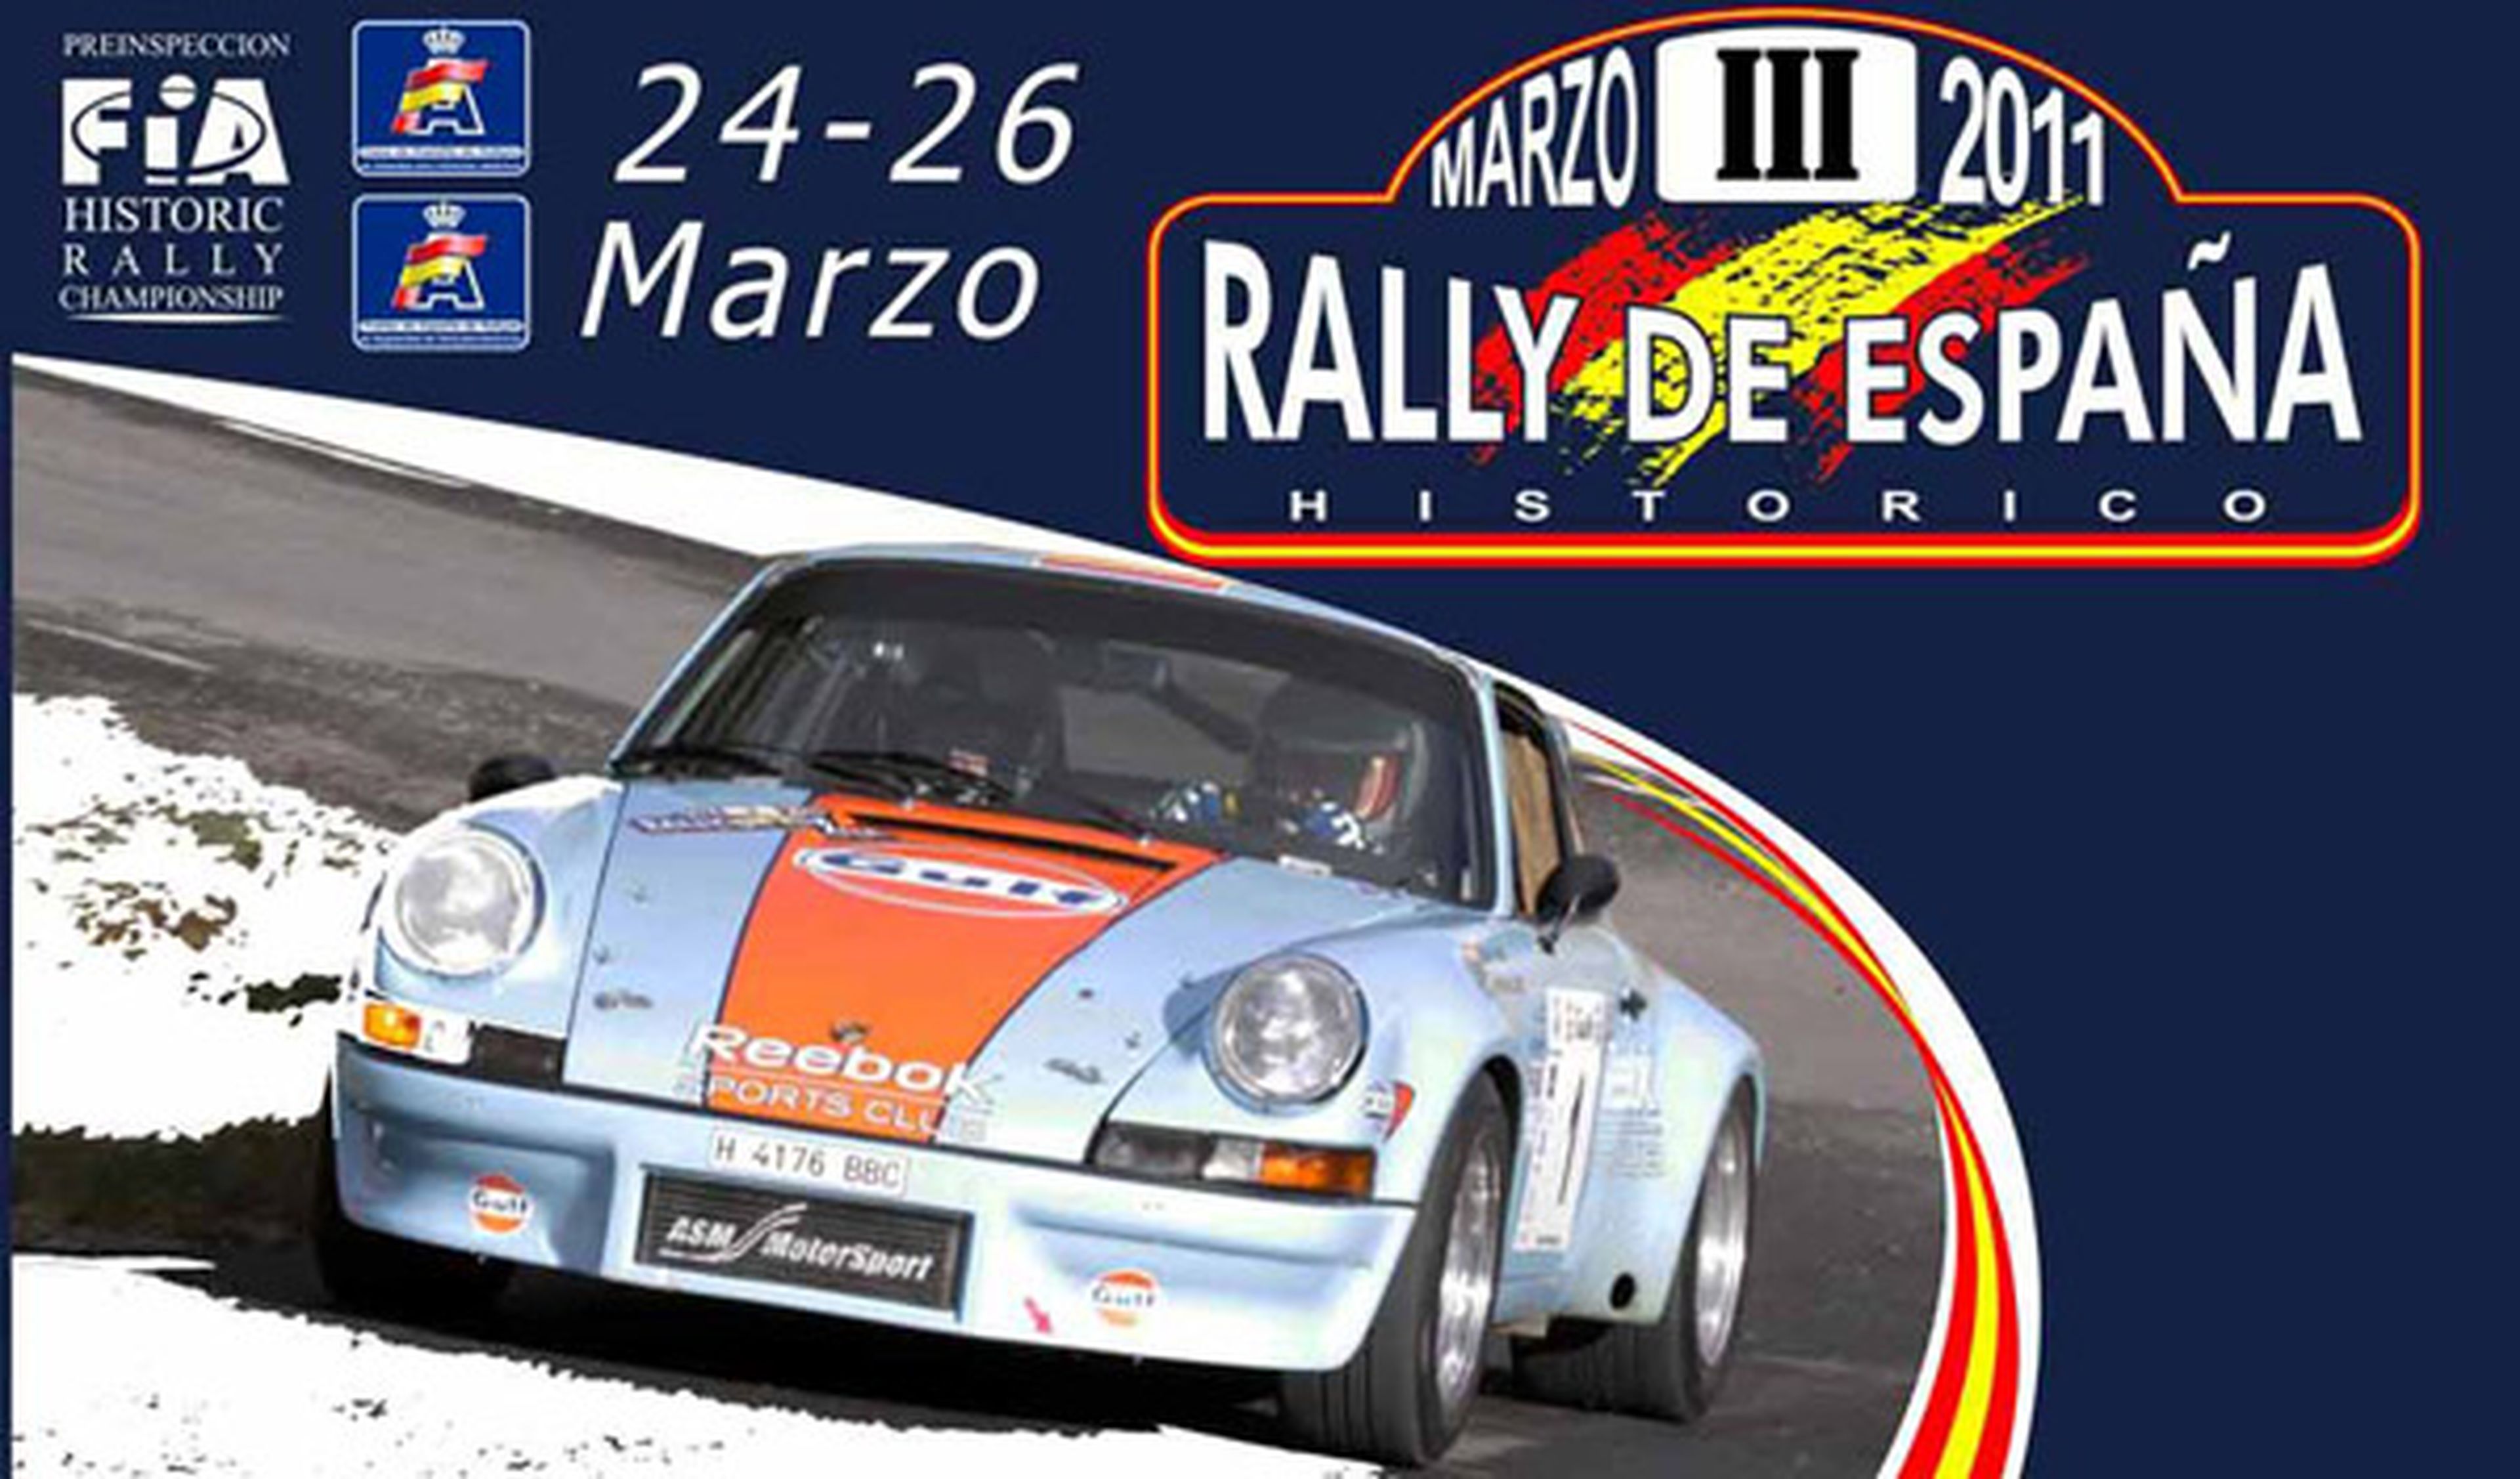 Tercera edición del Rally de España Histórico